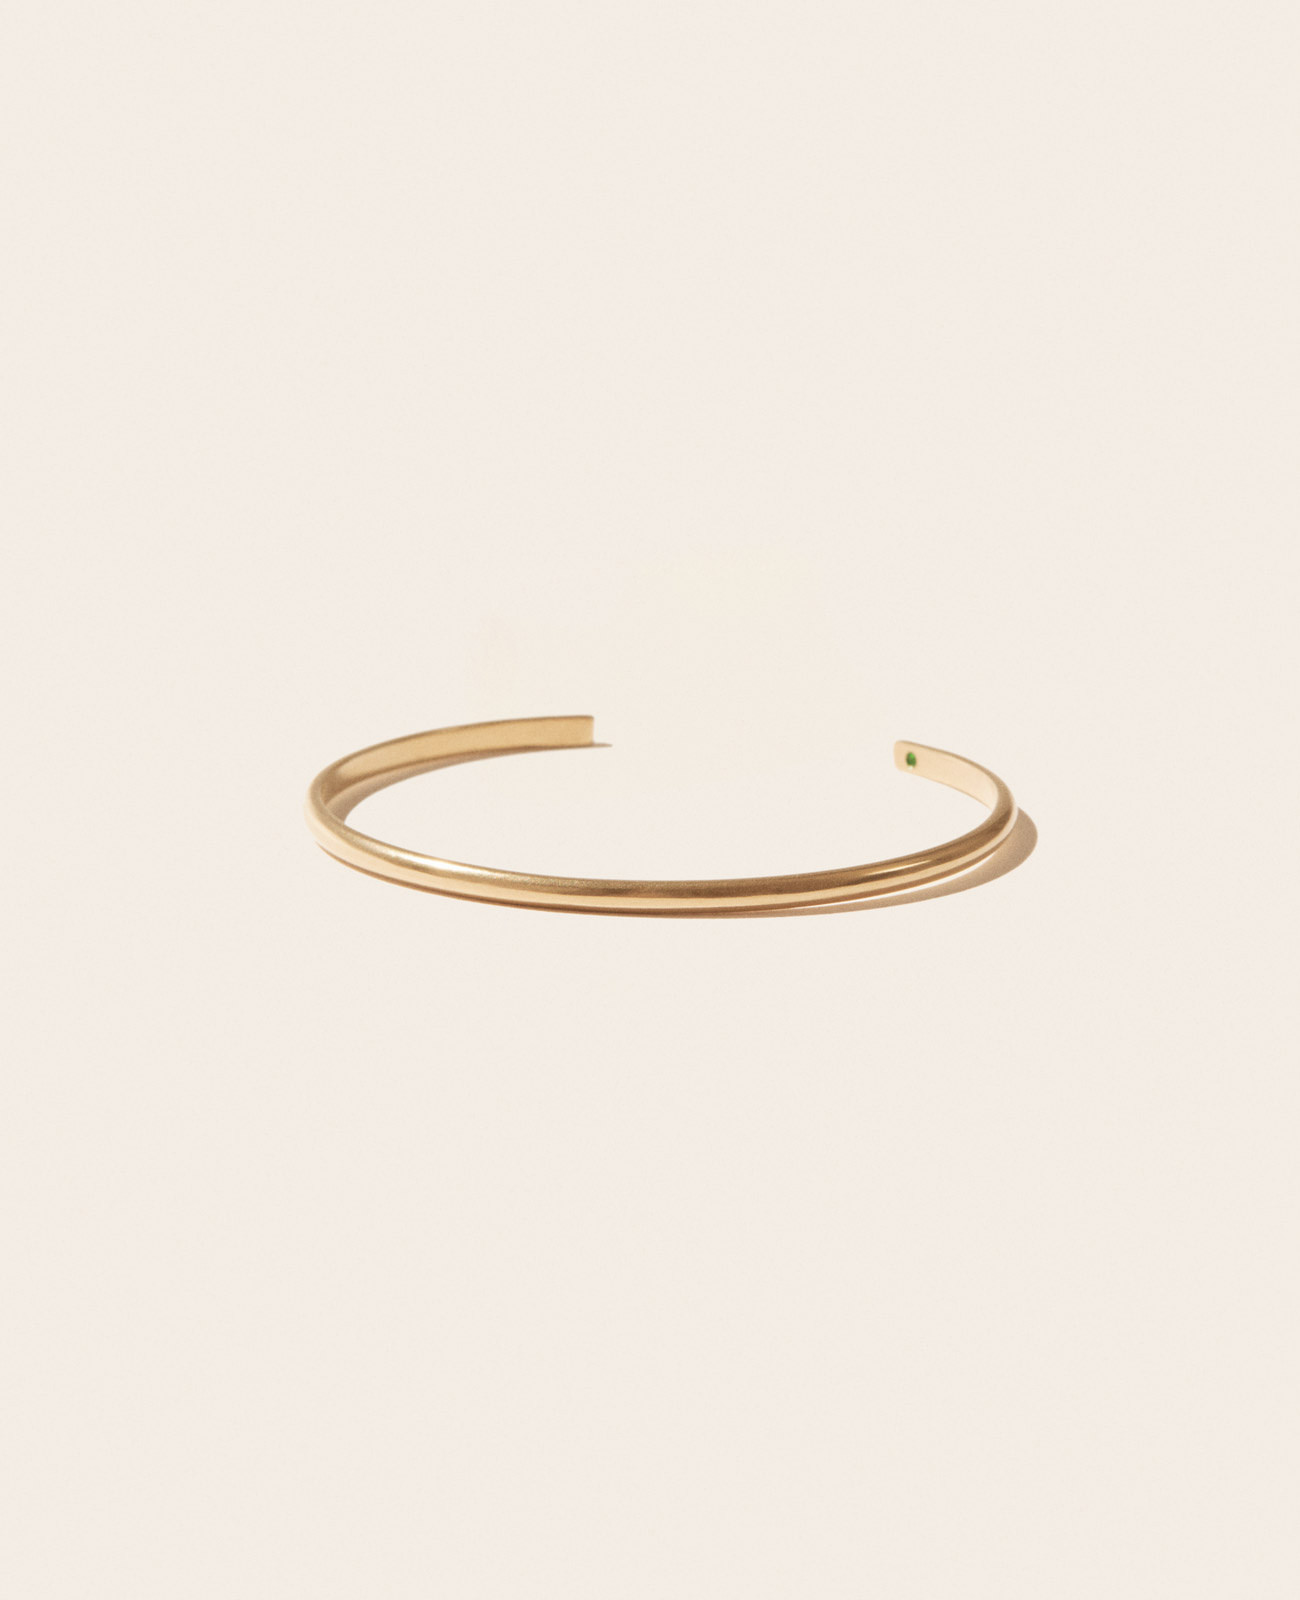 MARLON GOLD bracelet pascale monvoisin jewelry paris